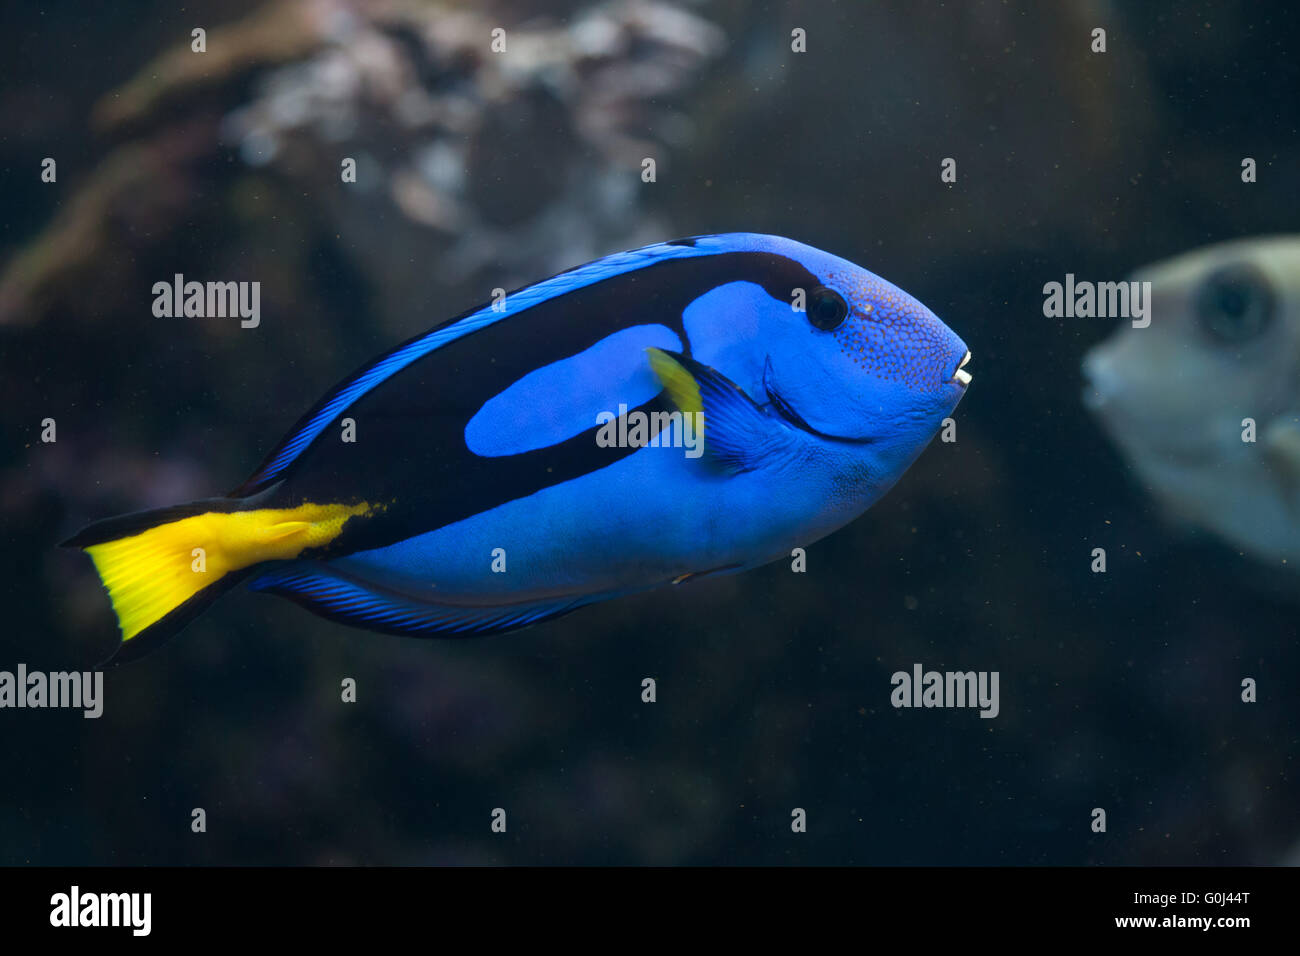 Blue surgeonfish (Paracanthurus hepatus), also known as the blue tang at Dvur Kralove Zoo, Czech Republic. Stock Photo